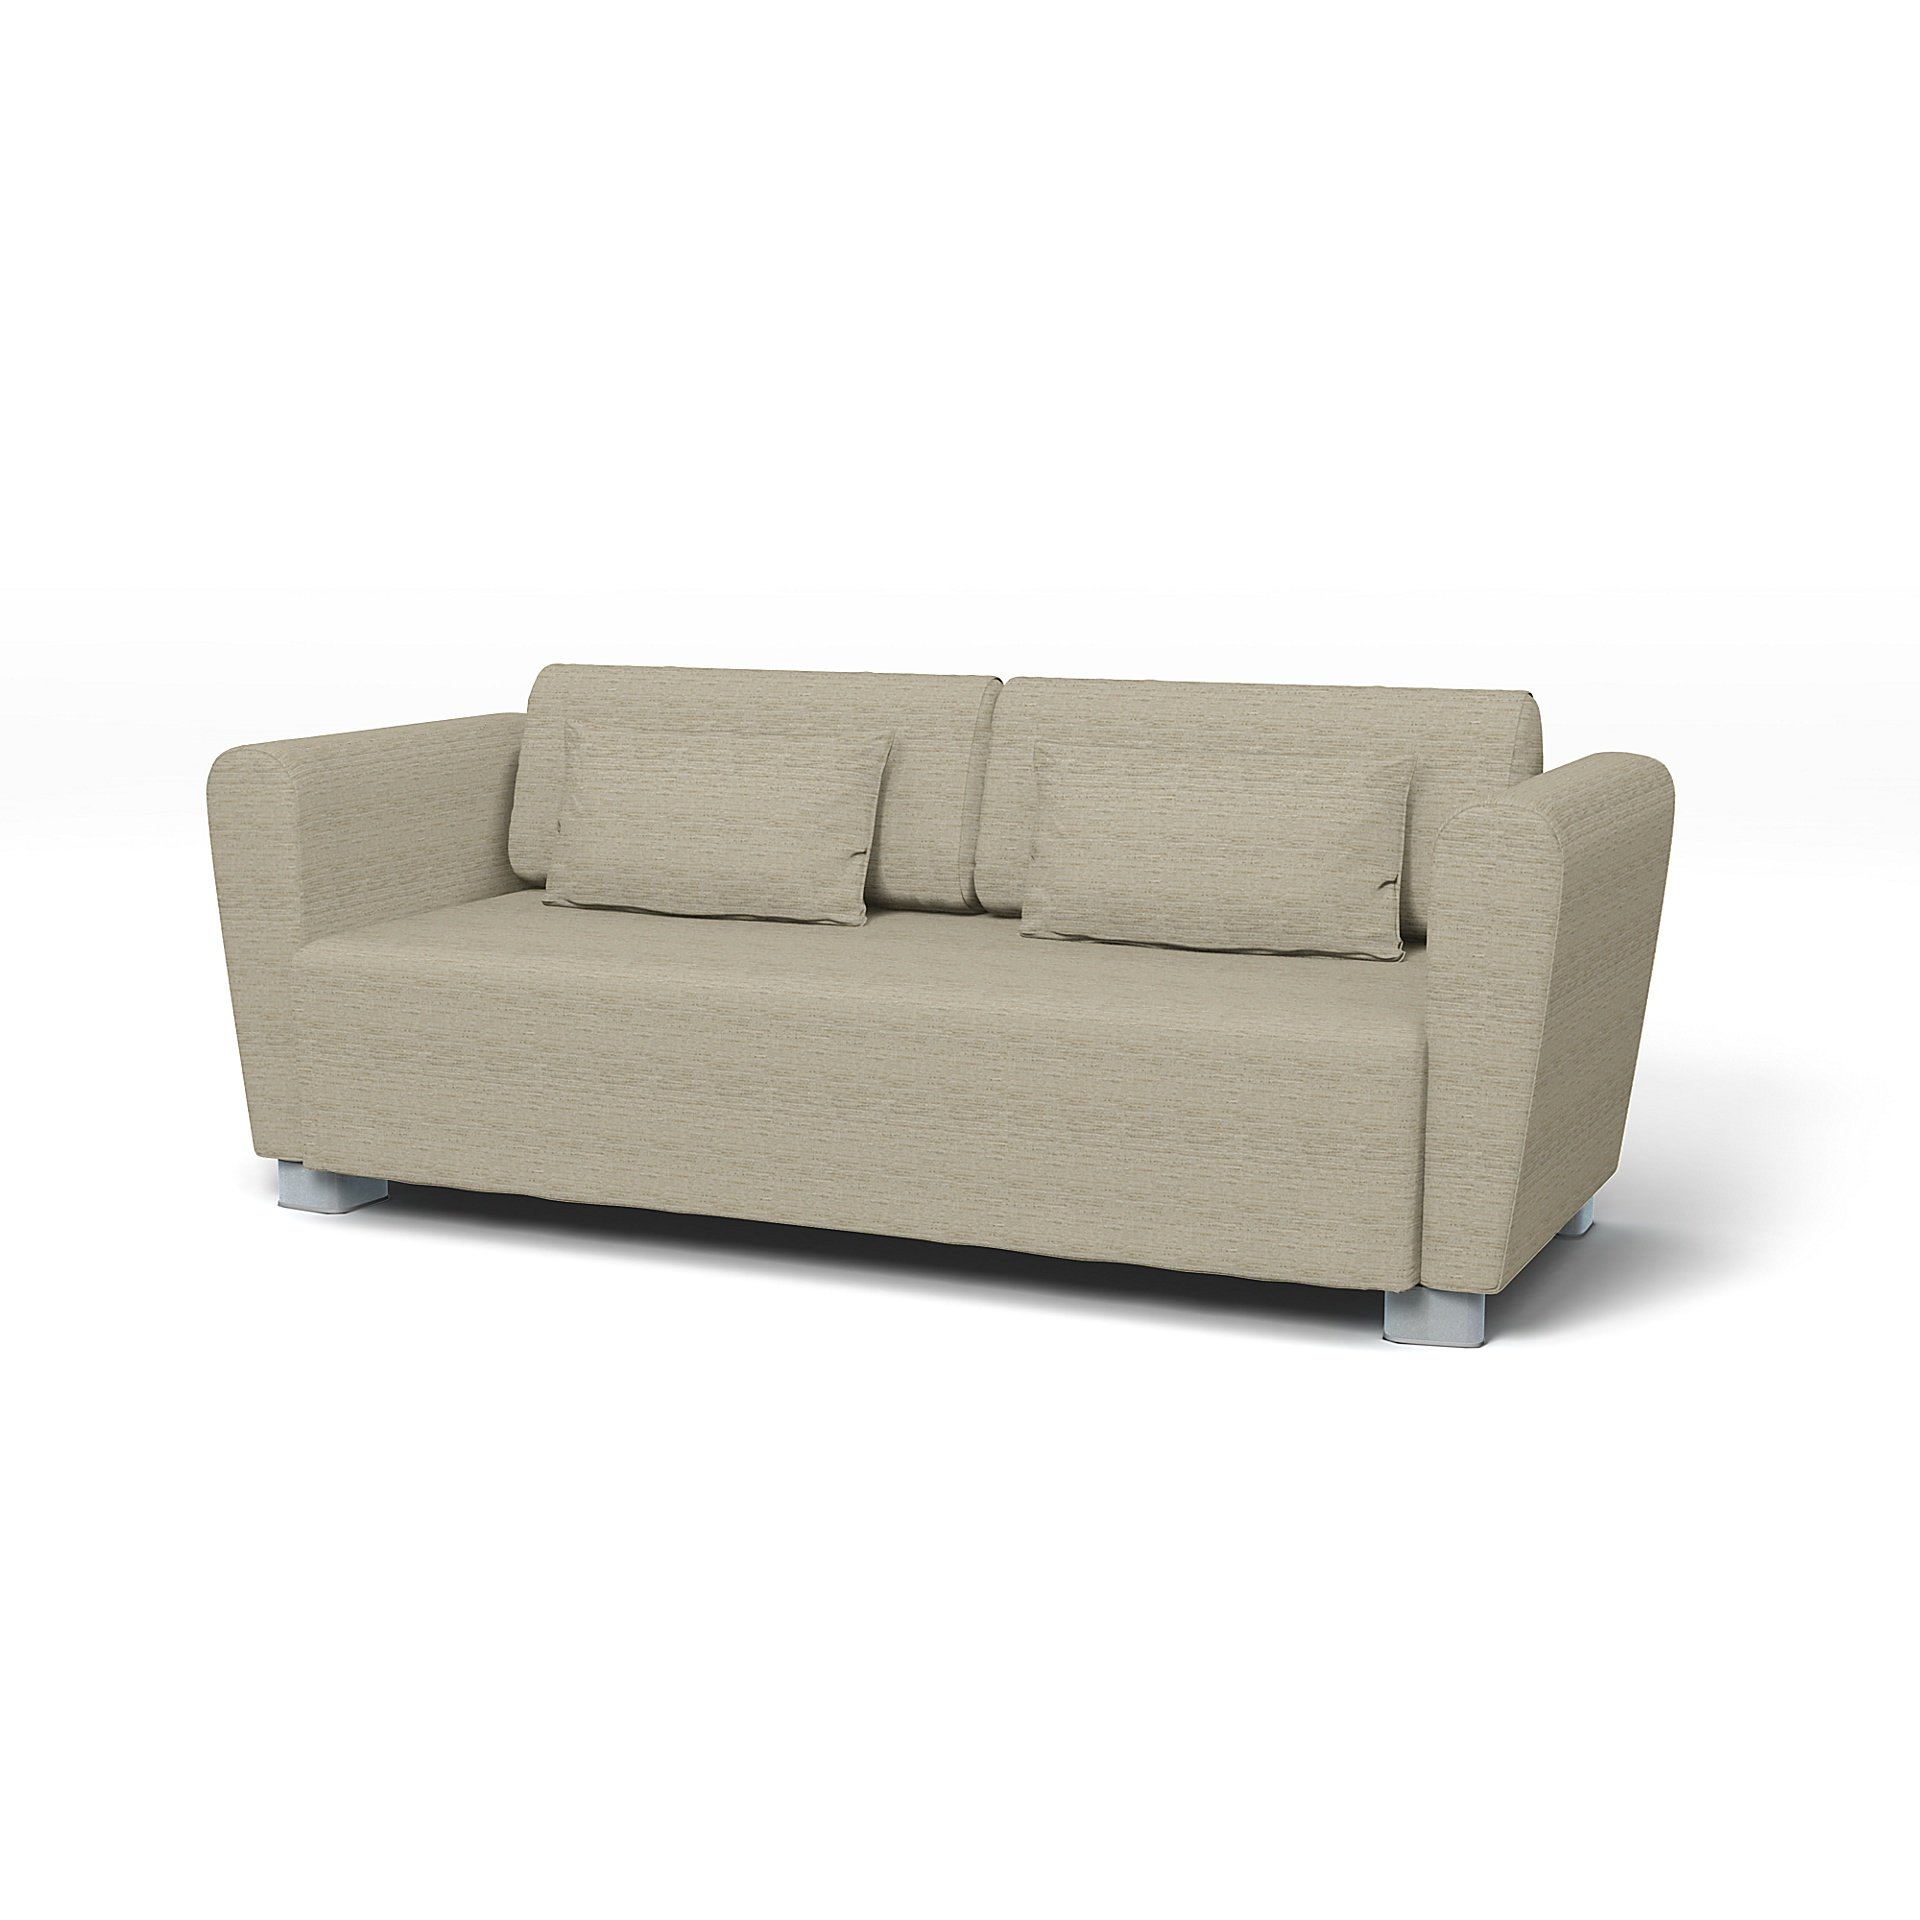 IKEA - Mysinge 2 Seater Sofa Cover, Light Sand, Boucle & Texture - Bemz